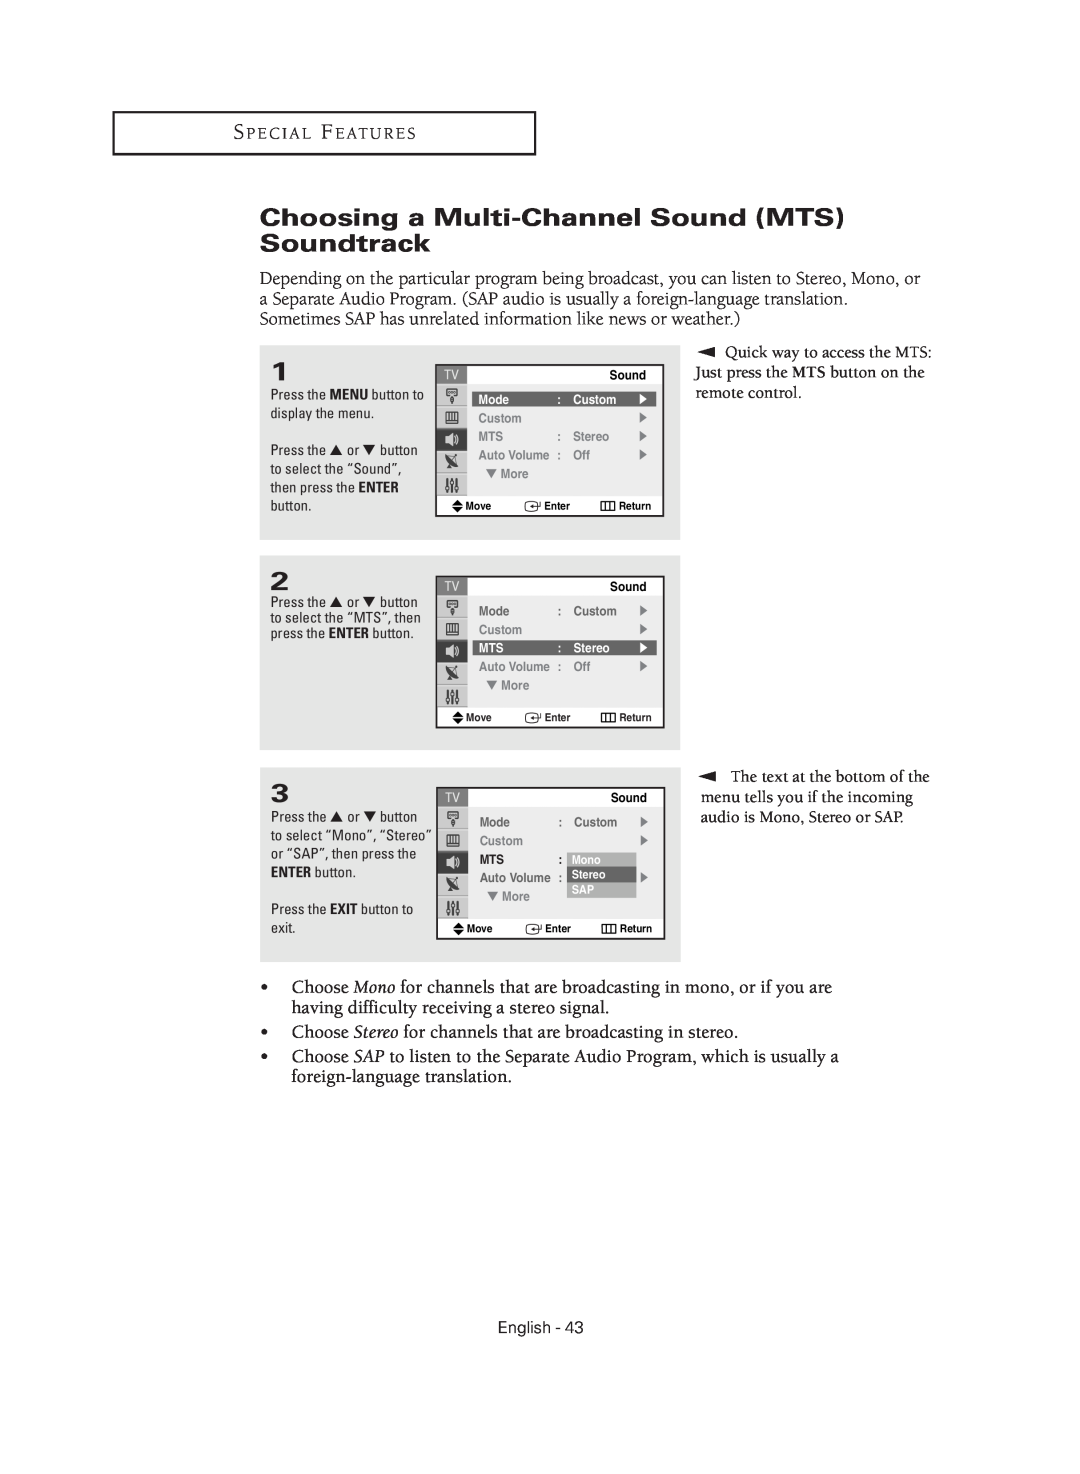 Samsung TX-R2735G manual Choosing a Multi-Channel Sound MTS Soundtrack 